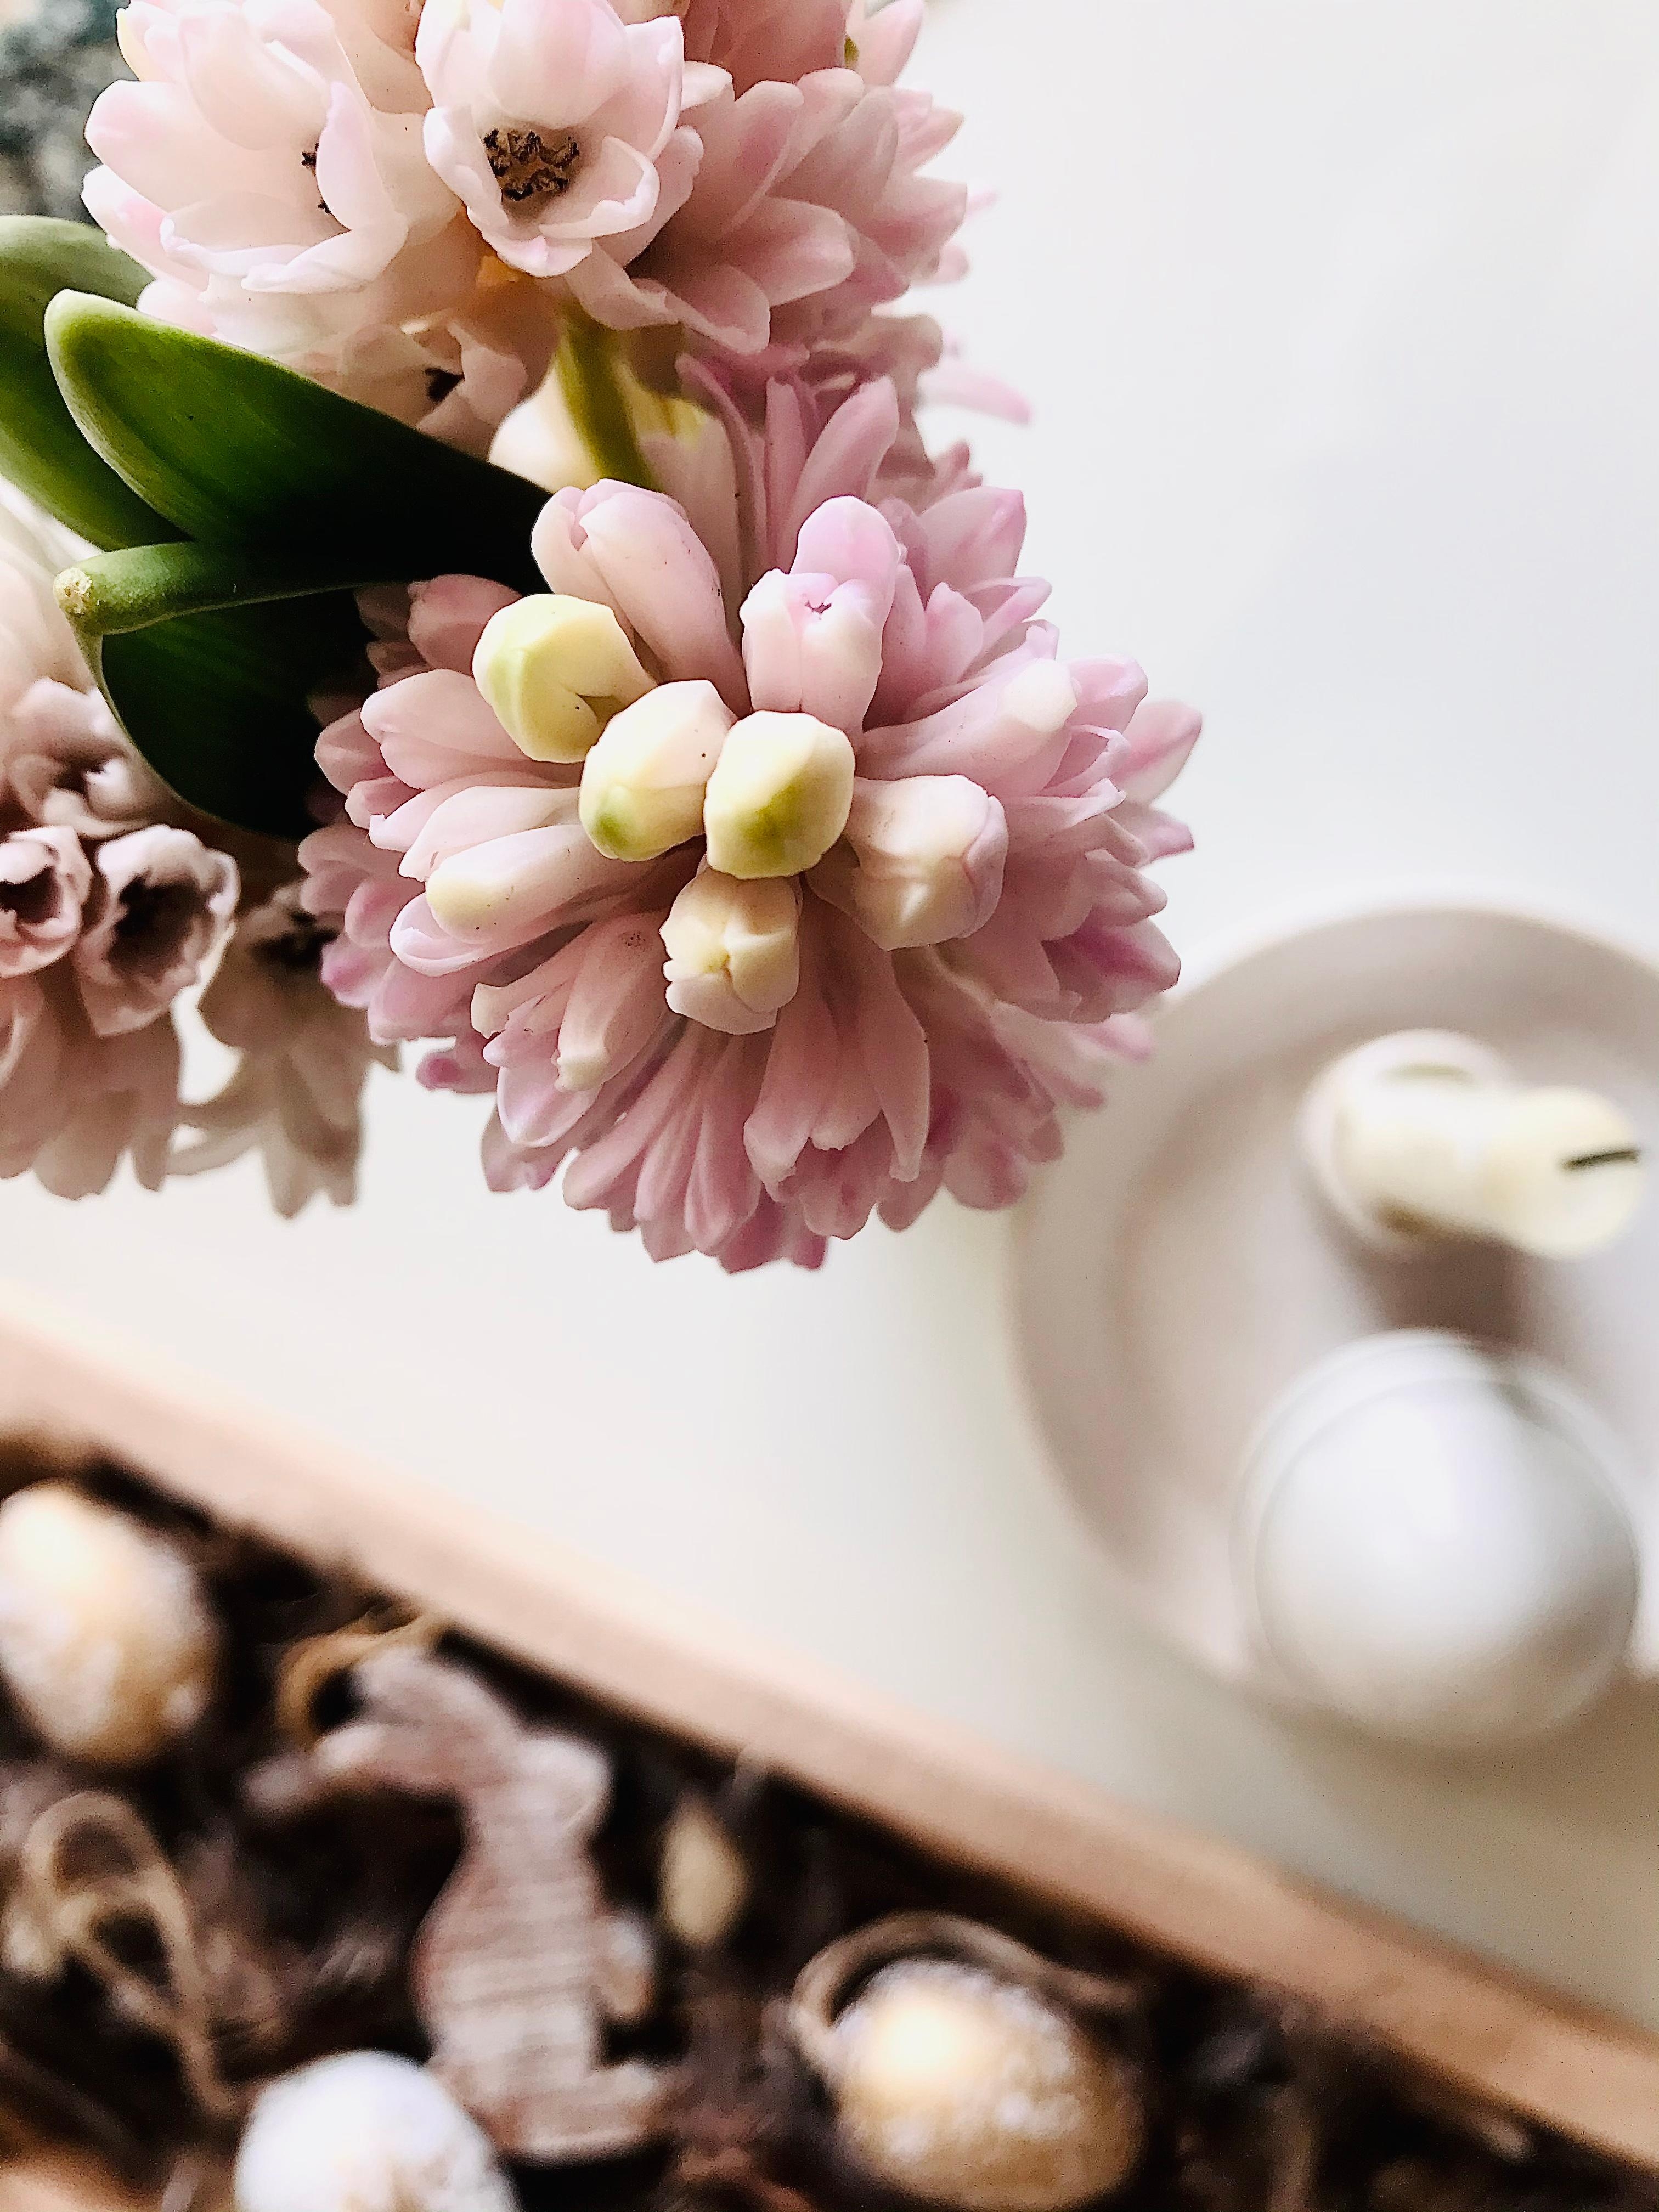 Letztes Oster picture🐰 dann kann die Deko verstaut werden
#freshflower #table #kerze #hyazinthe 
#rosaweiss #Frühling 